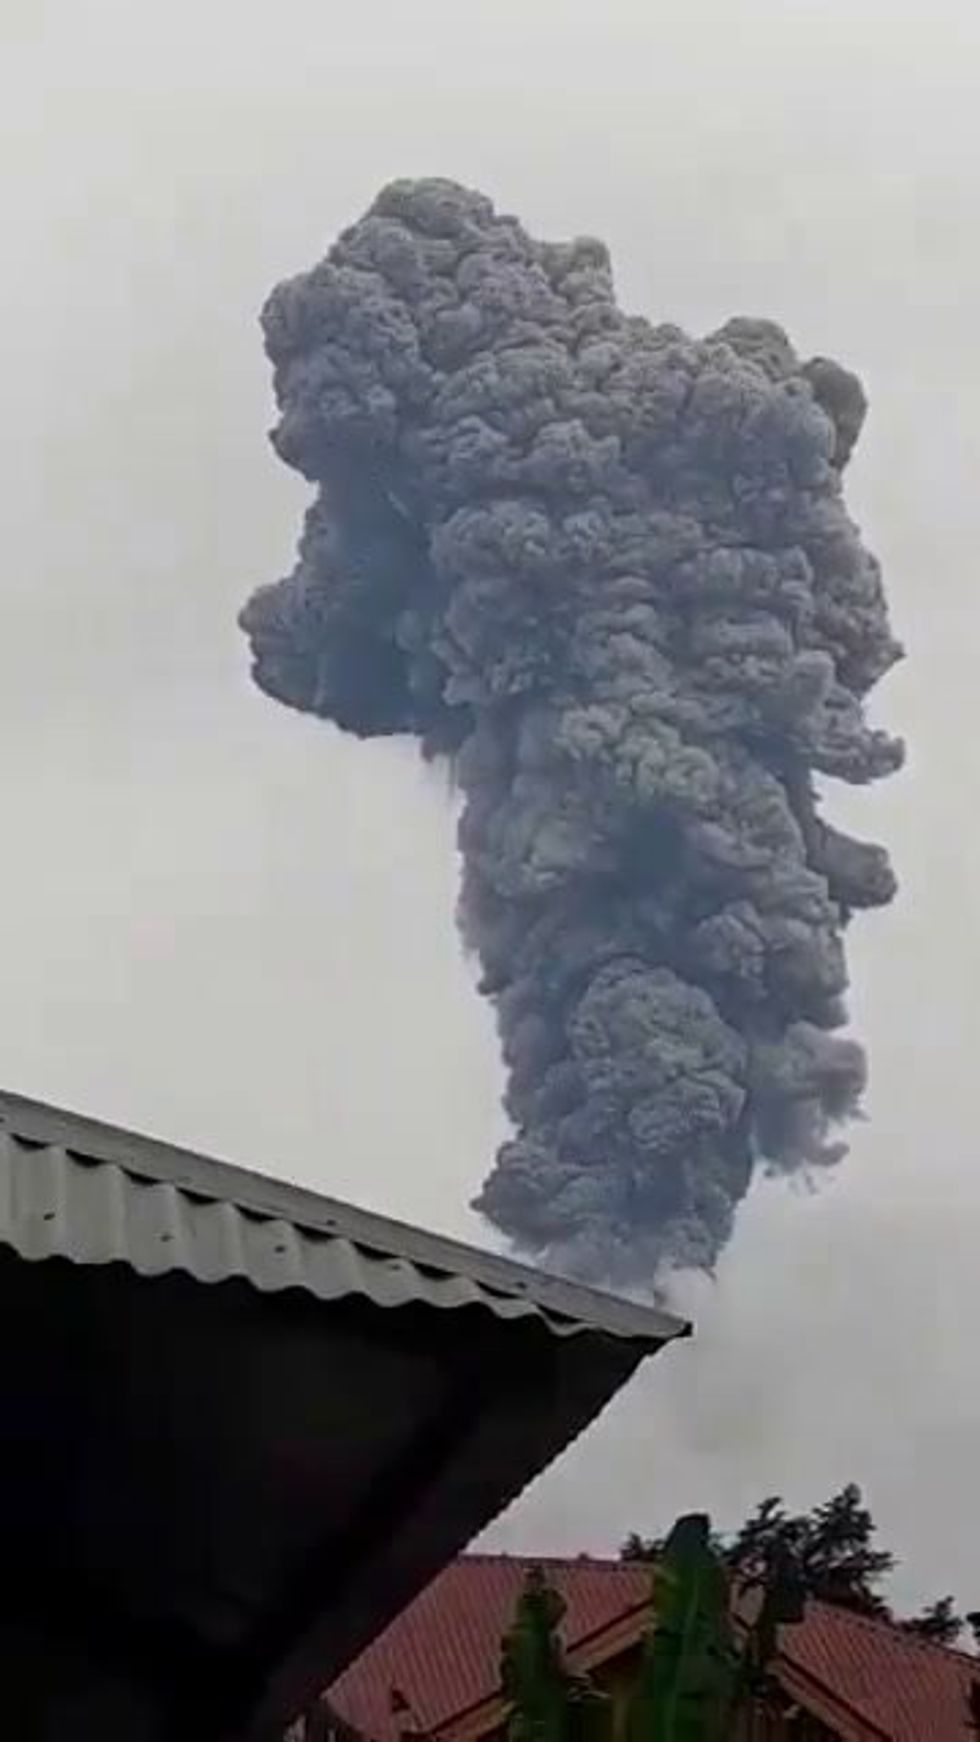 Indonesia, l'eruzione del vulcano Marapi